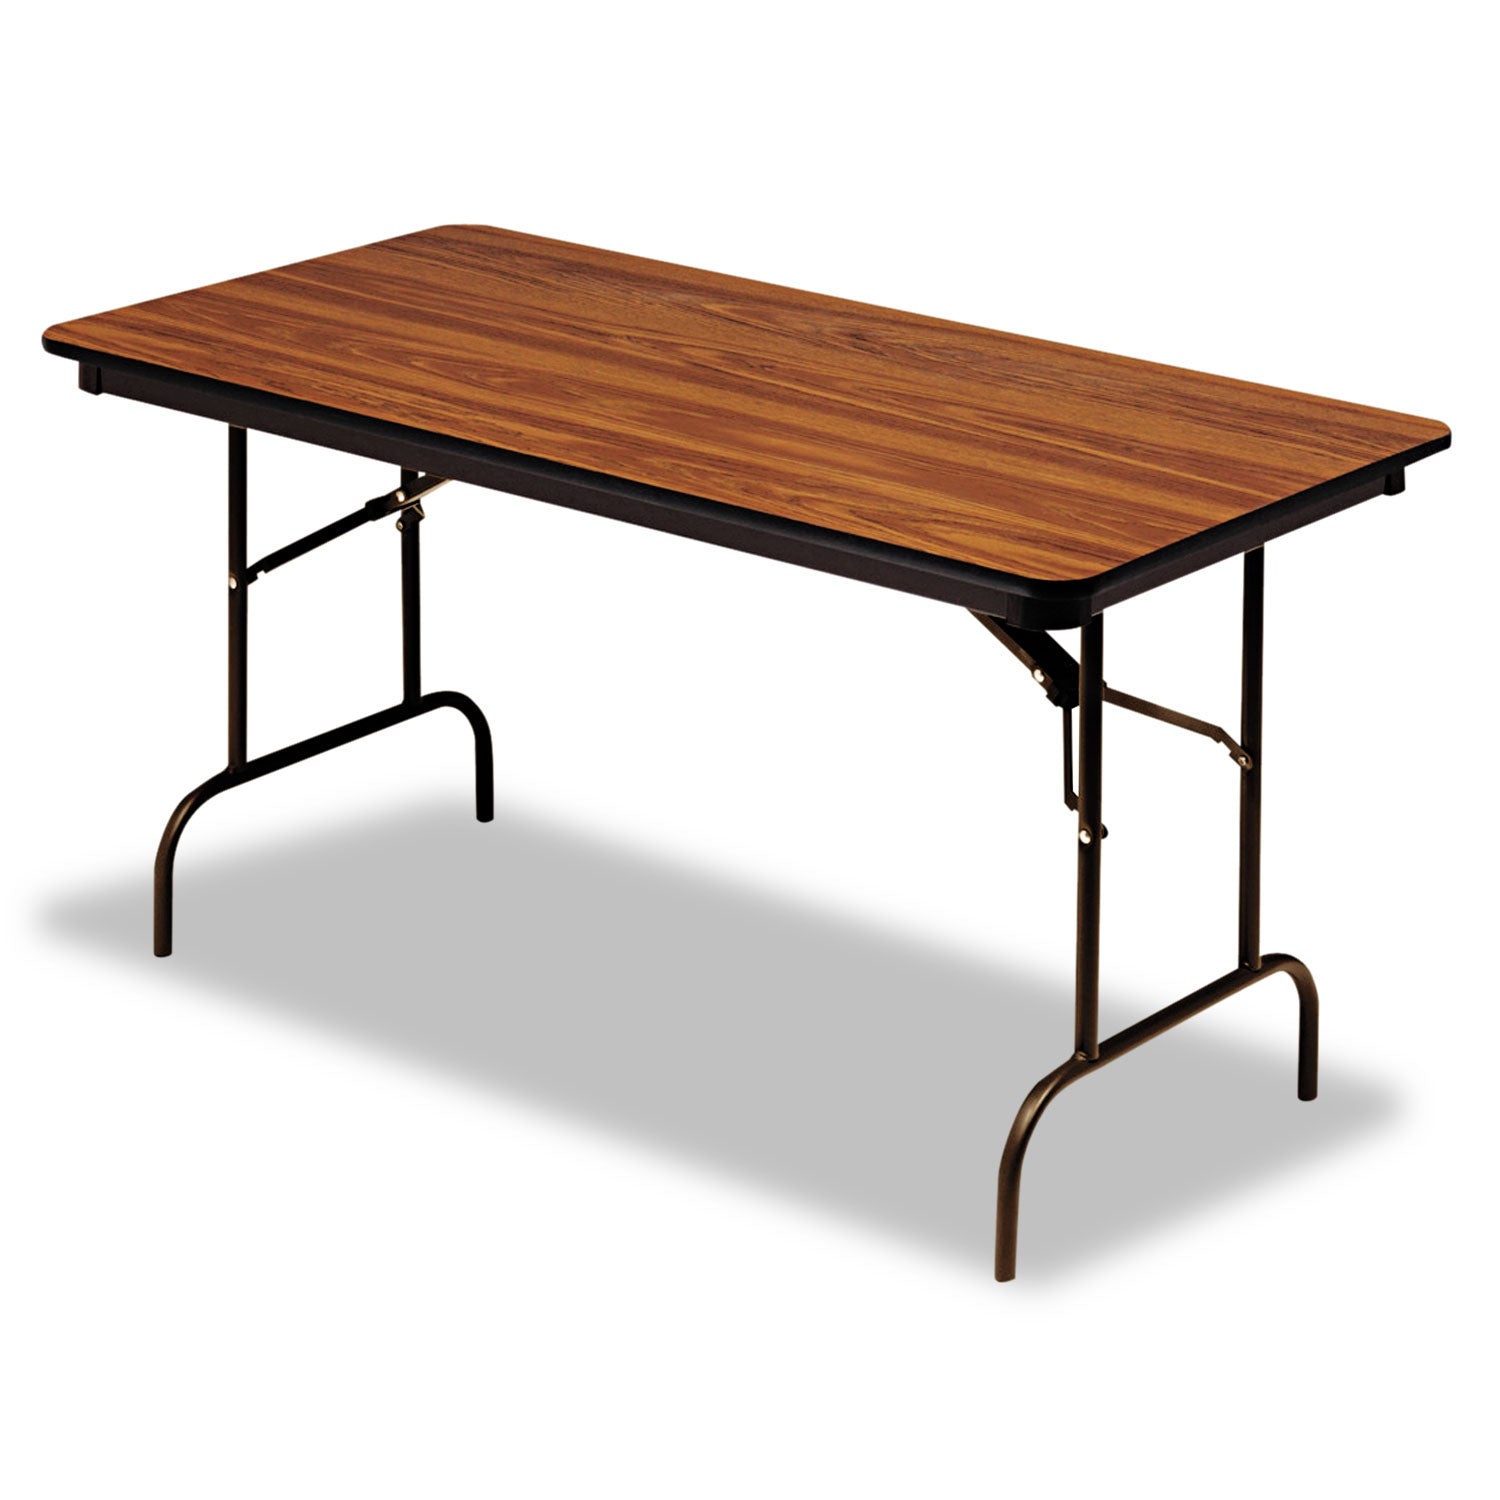 OfficeWorks Commercial Wood-Laminate Folding Table, Rectangular, 96" x 30" x 29", Oak - 